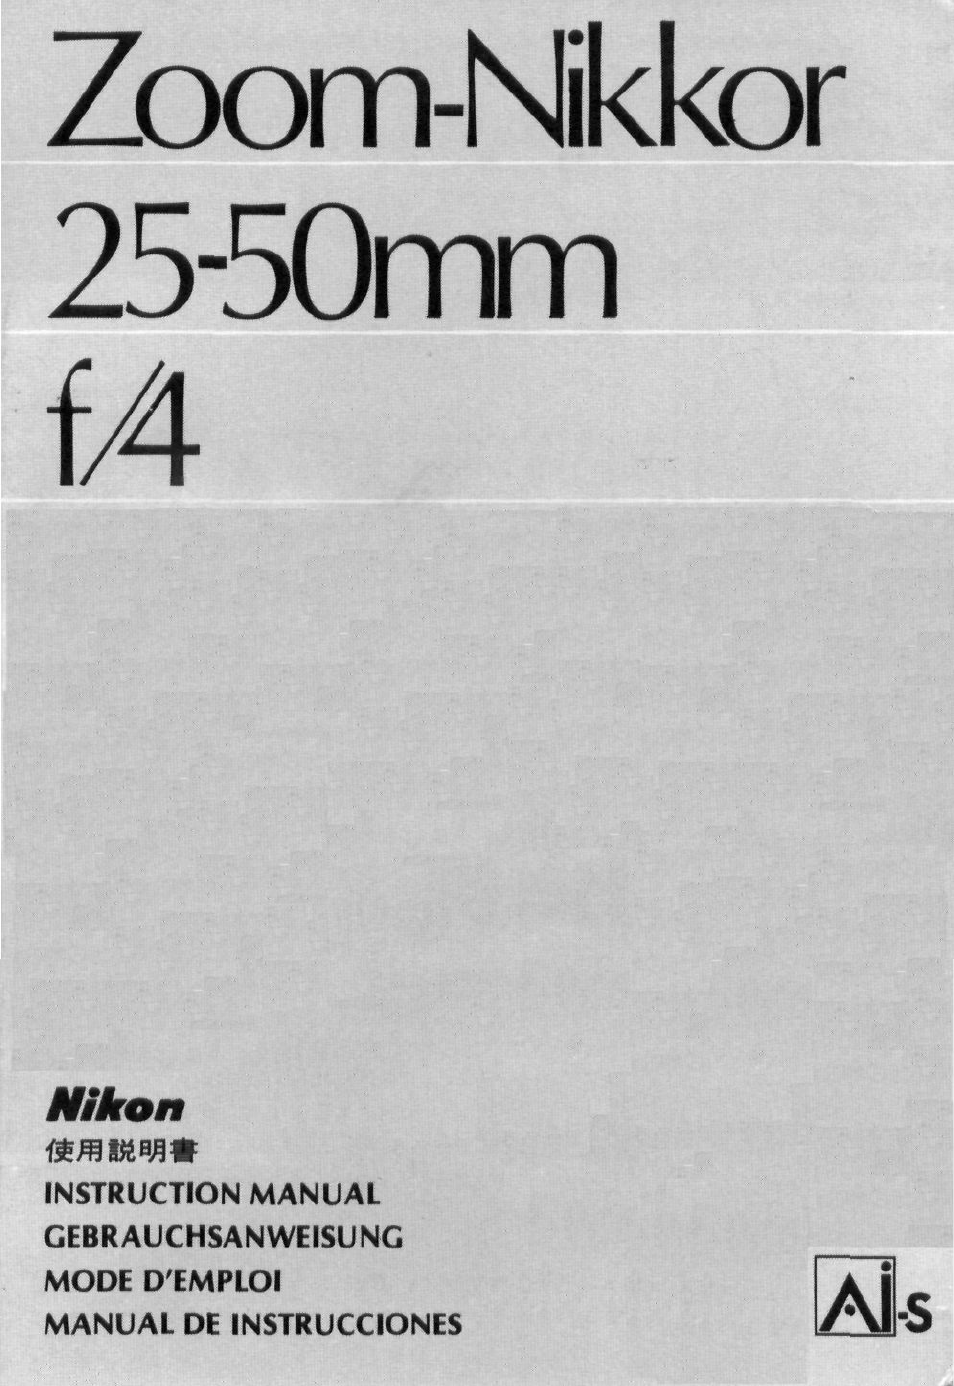 Nikon Zoom-Nikkor 25-50mm f/4 User Manual | 26 pages